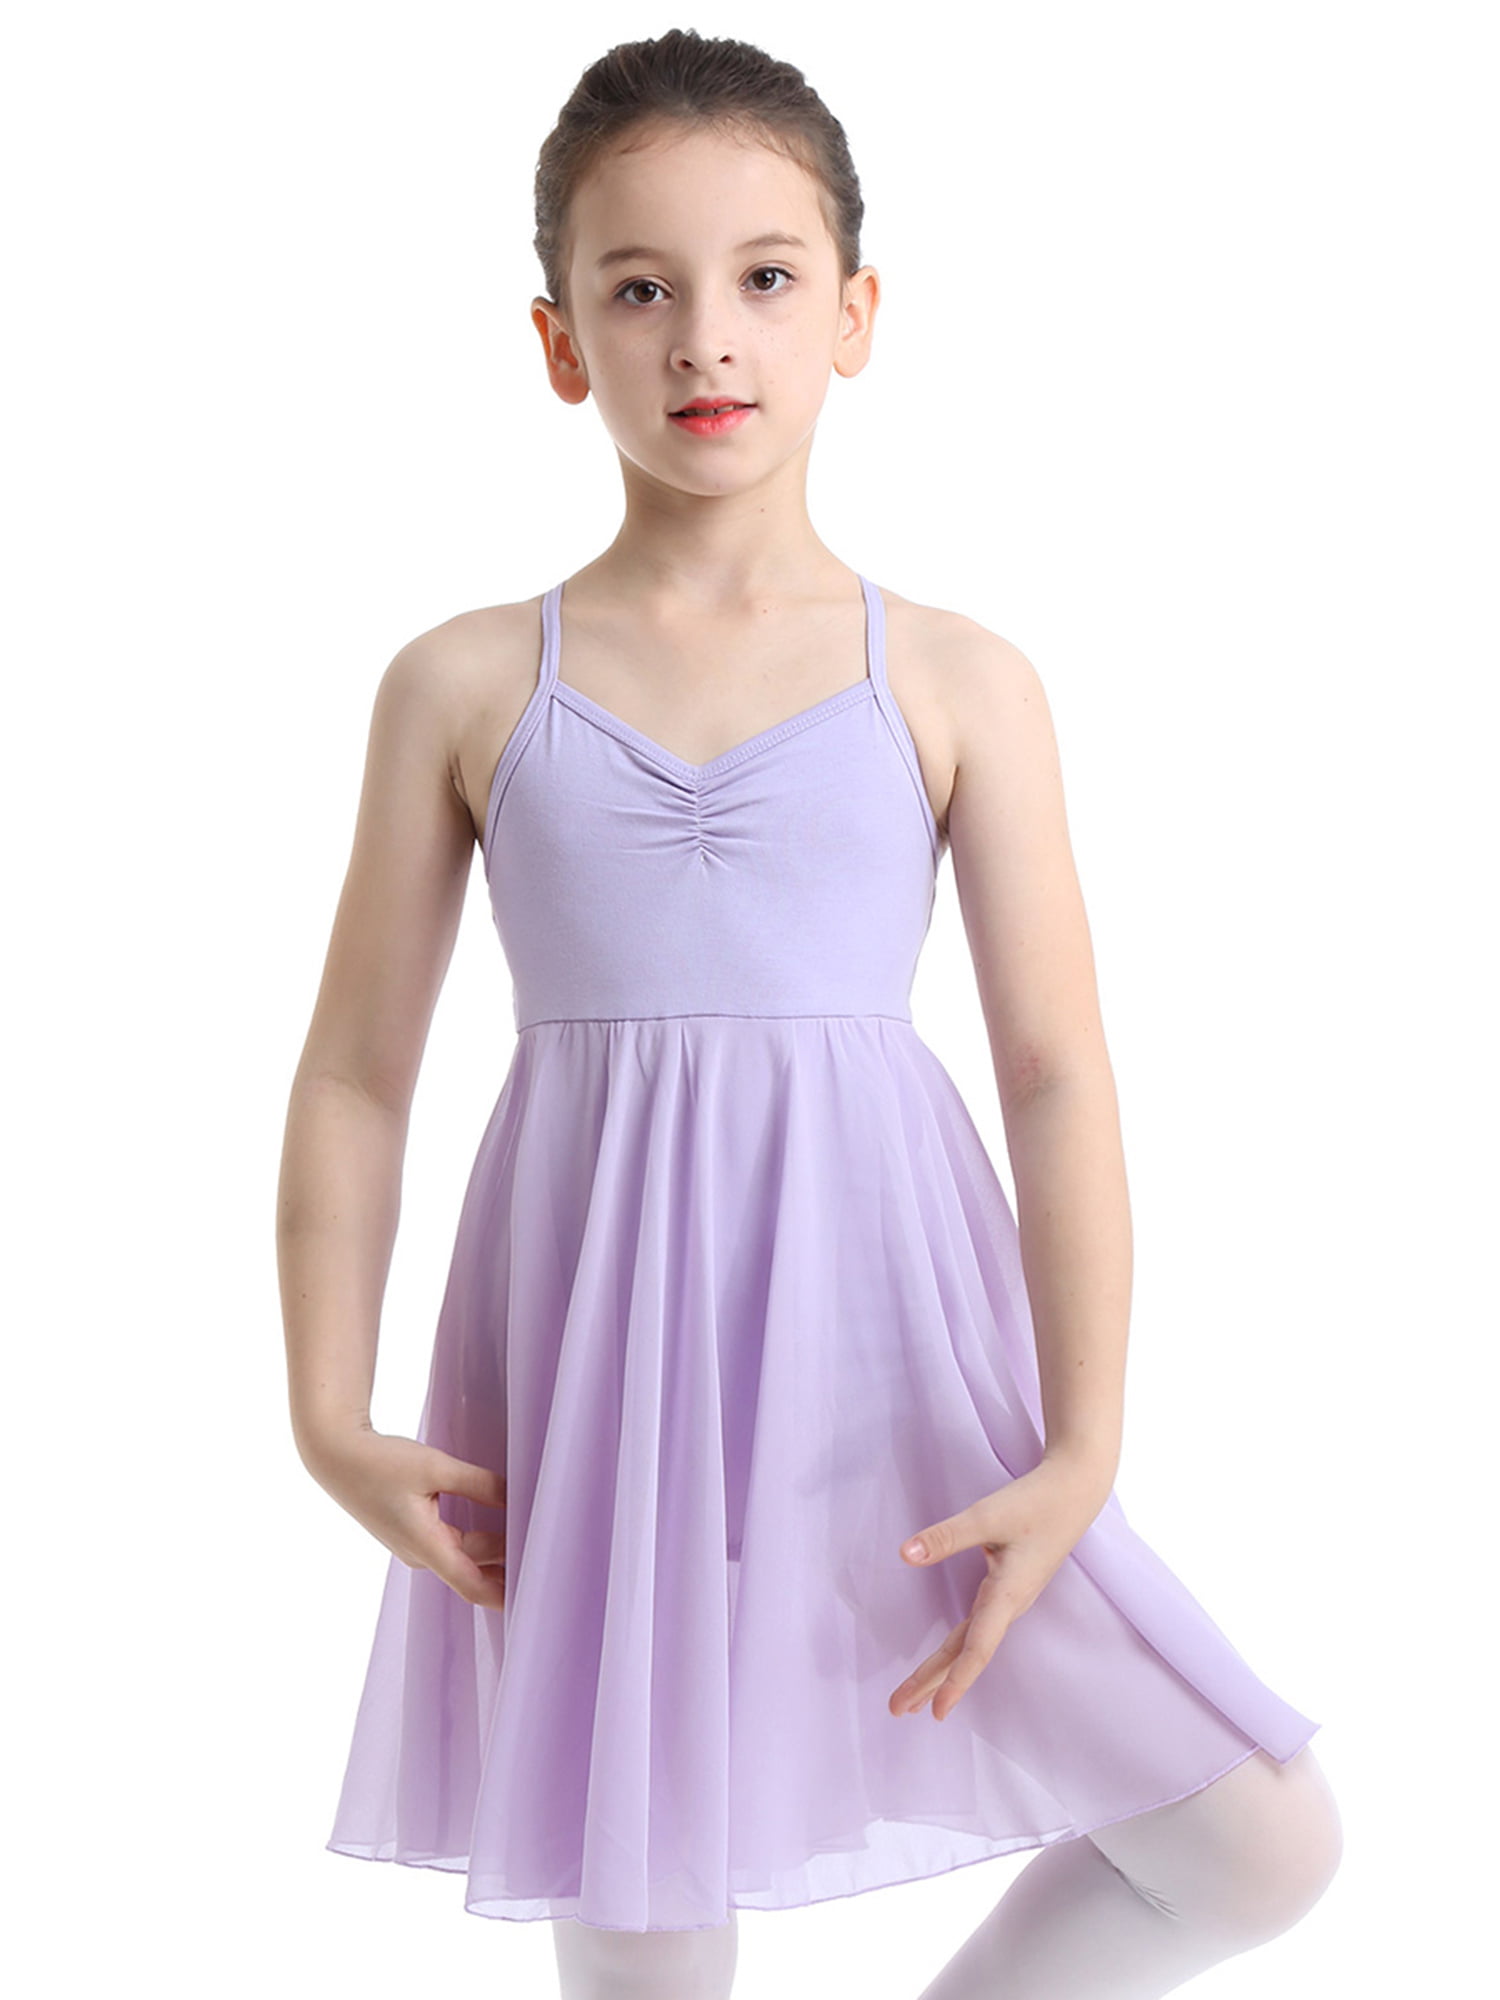 Girls Kids Lyrical Praise Dance Dress Mesh Gymnastics Ballet Tutu Skirt Costume 